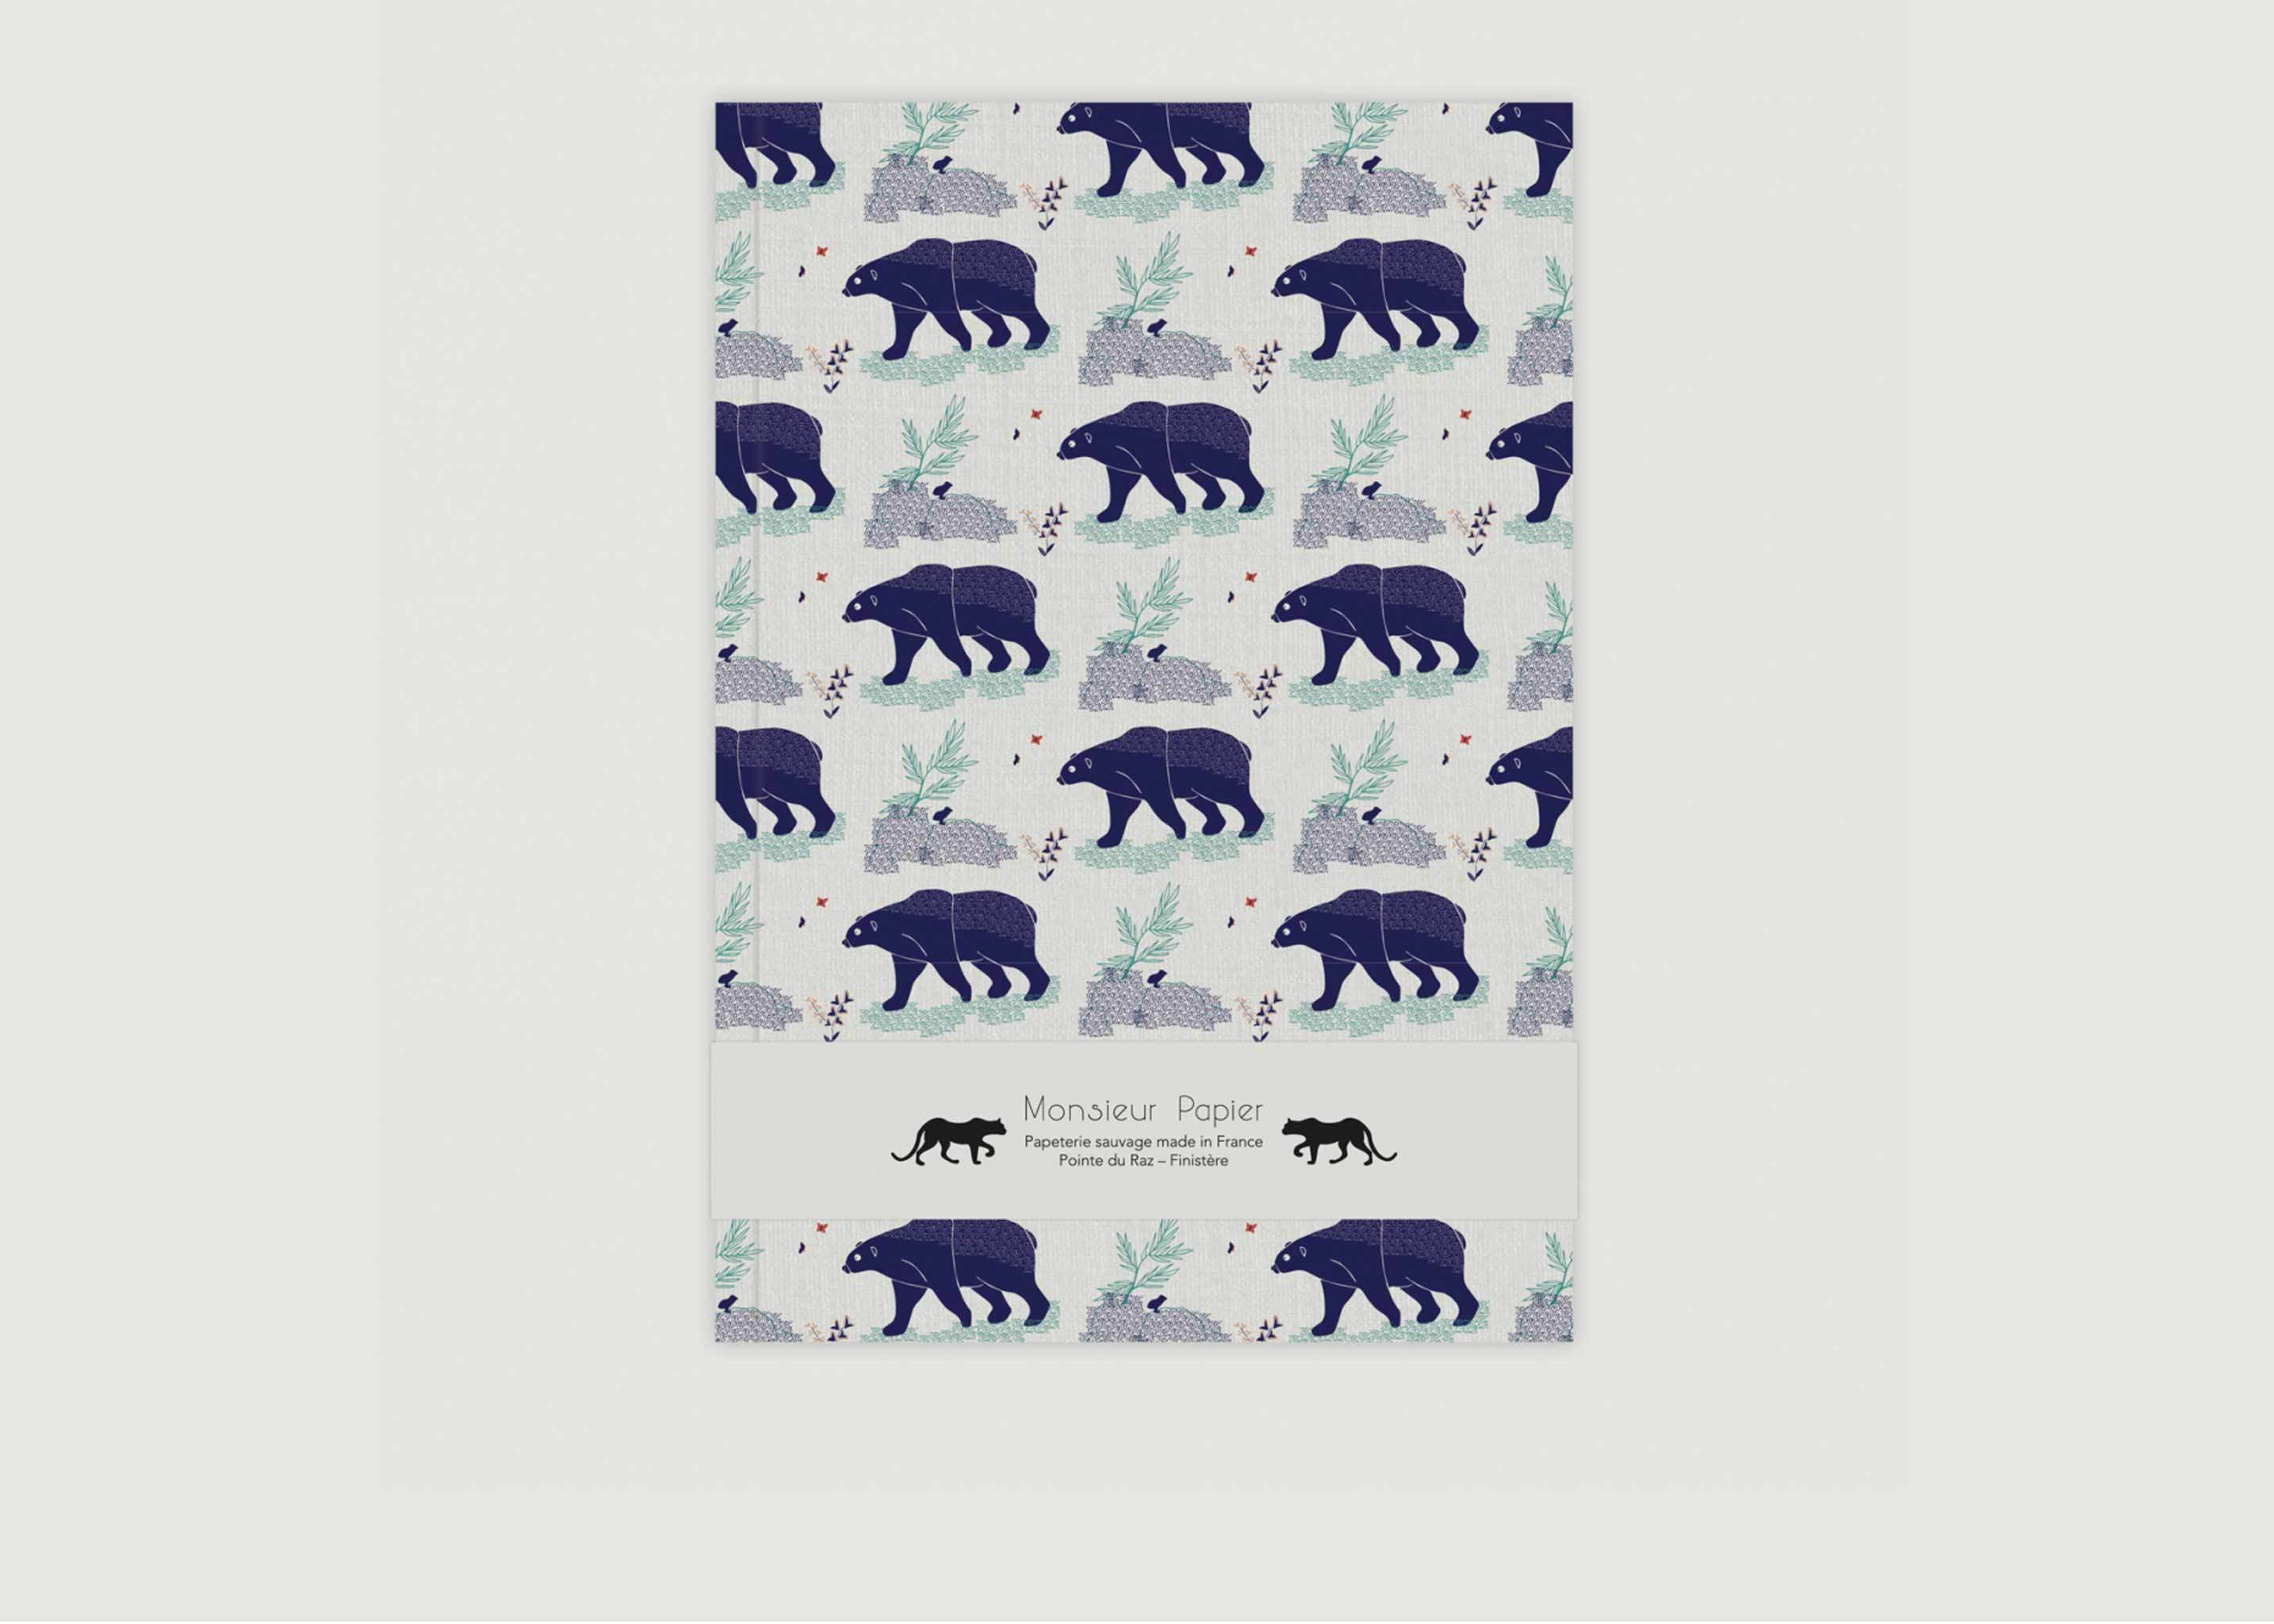 Manitoba Polar Bear Notebook - Monsieur Papier